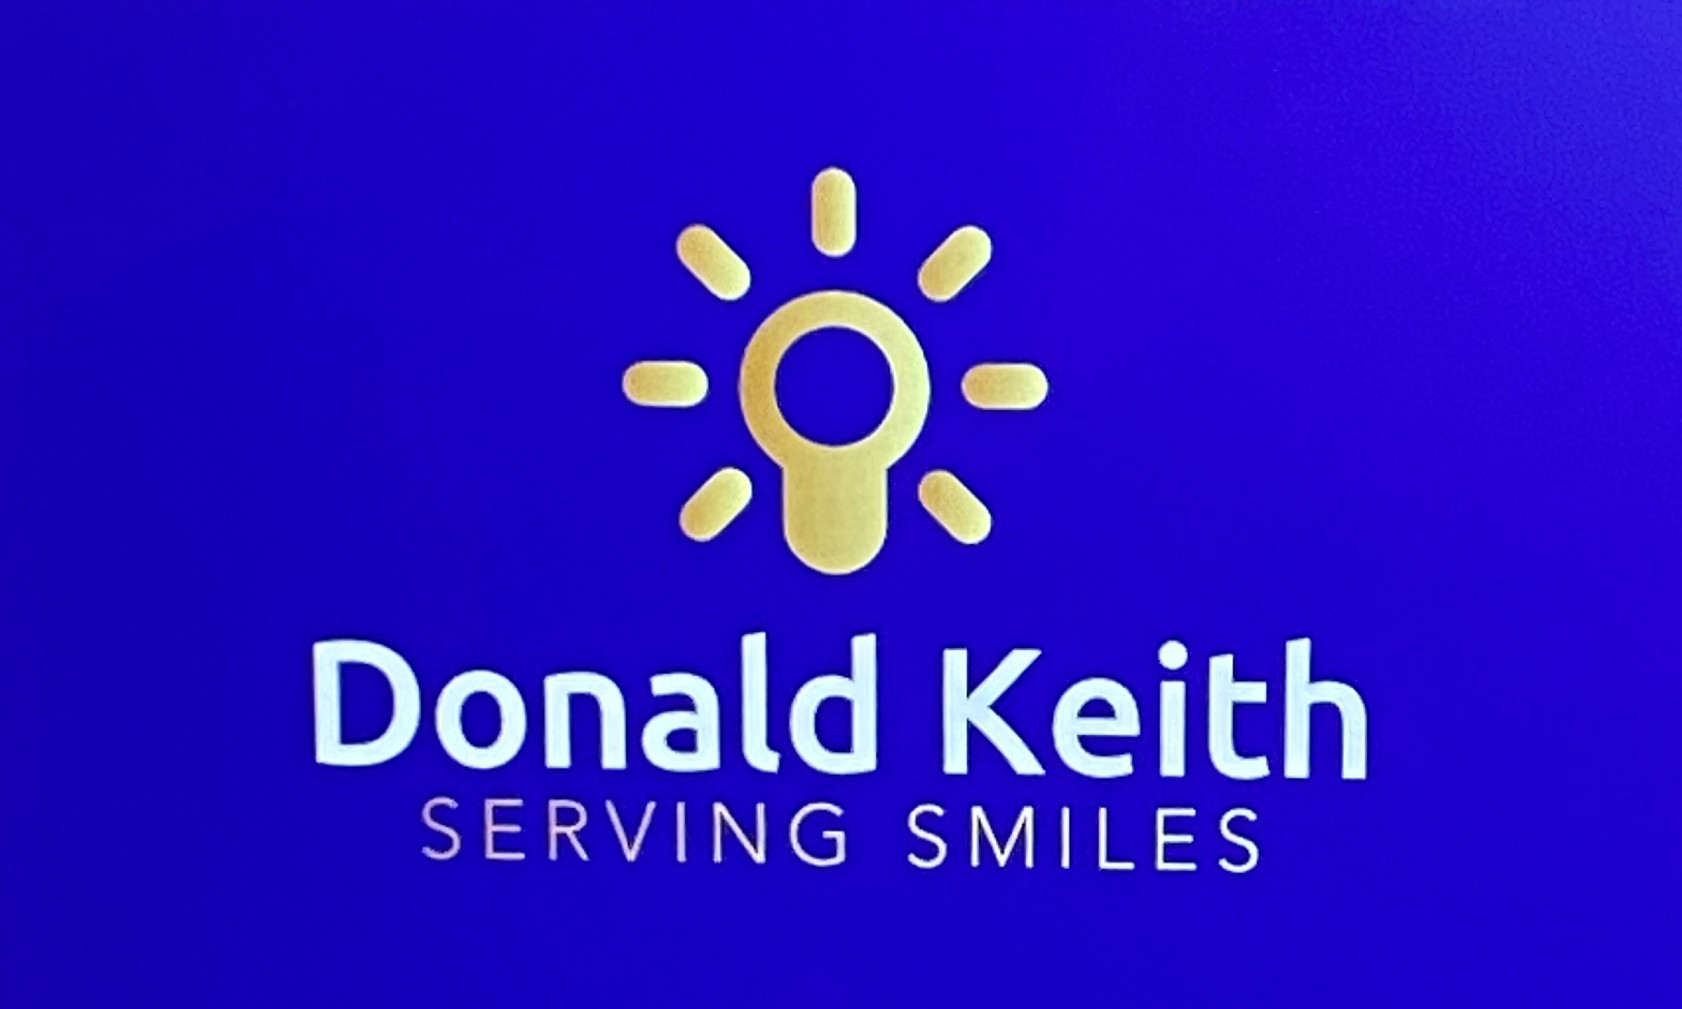 Donald Keith - Website